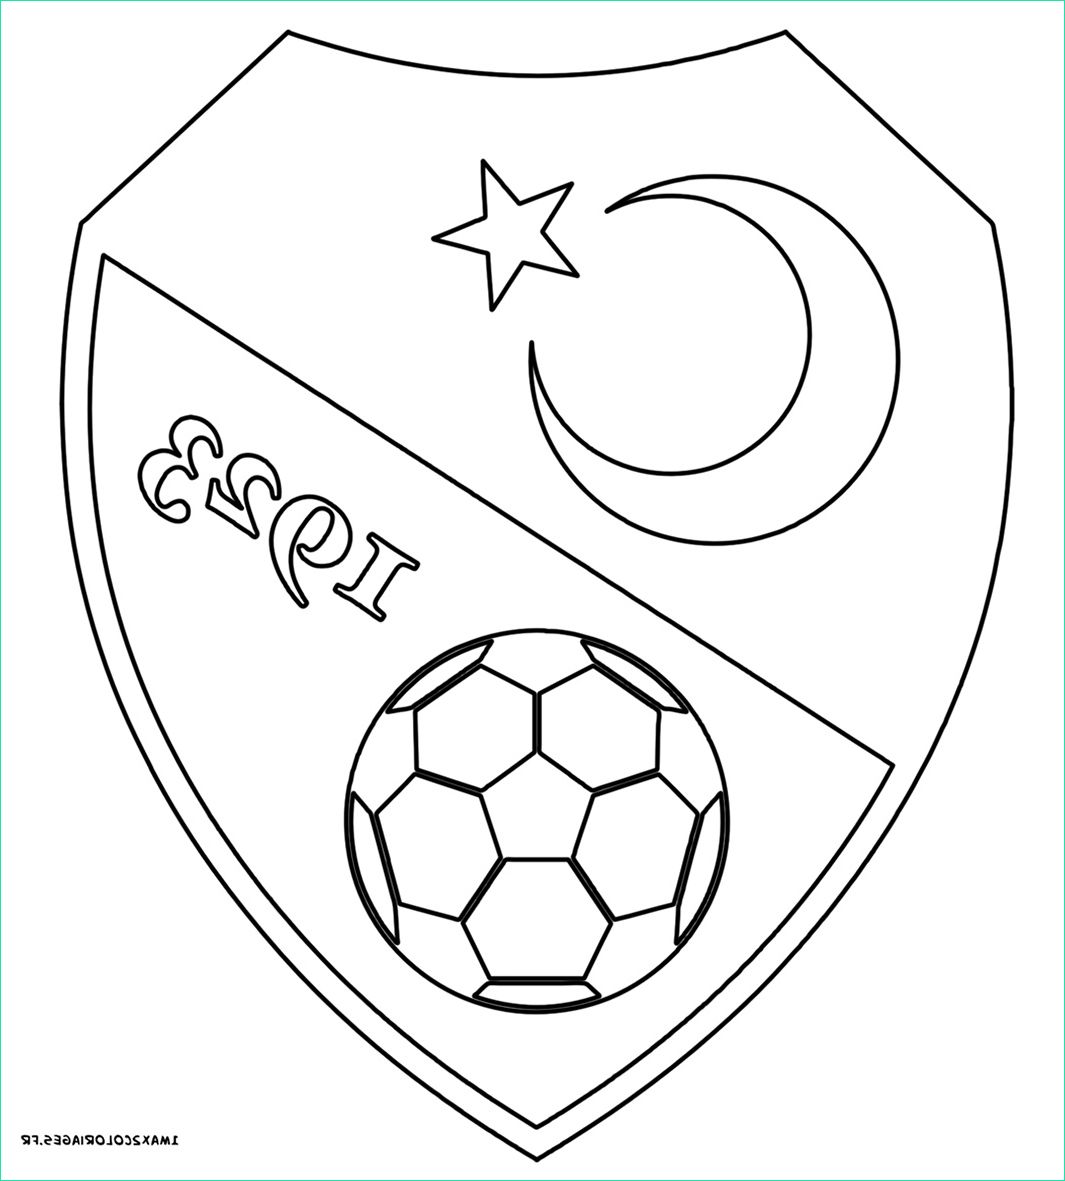 Coloriage De L Euro 2016 Luxe Galerie Euro 2016 Logo De L équipe De Turquie De Foot En Coloriage